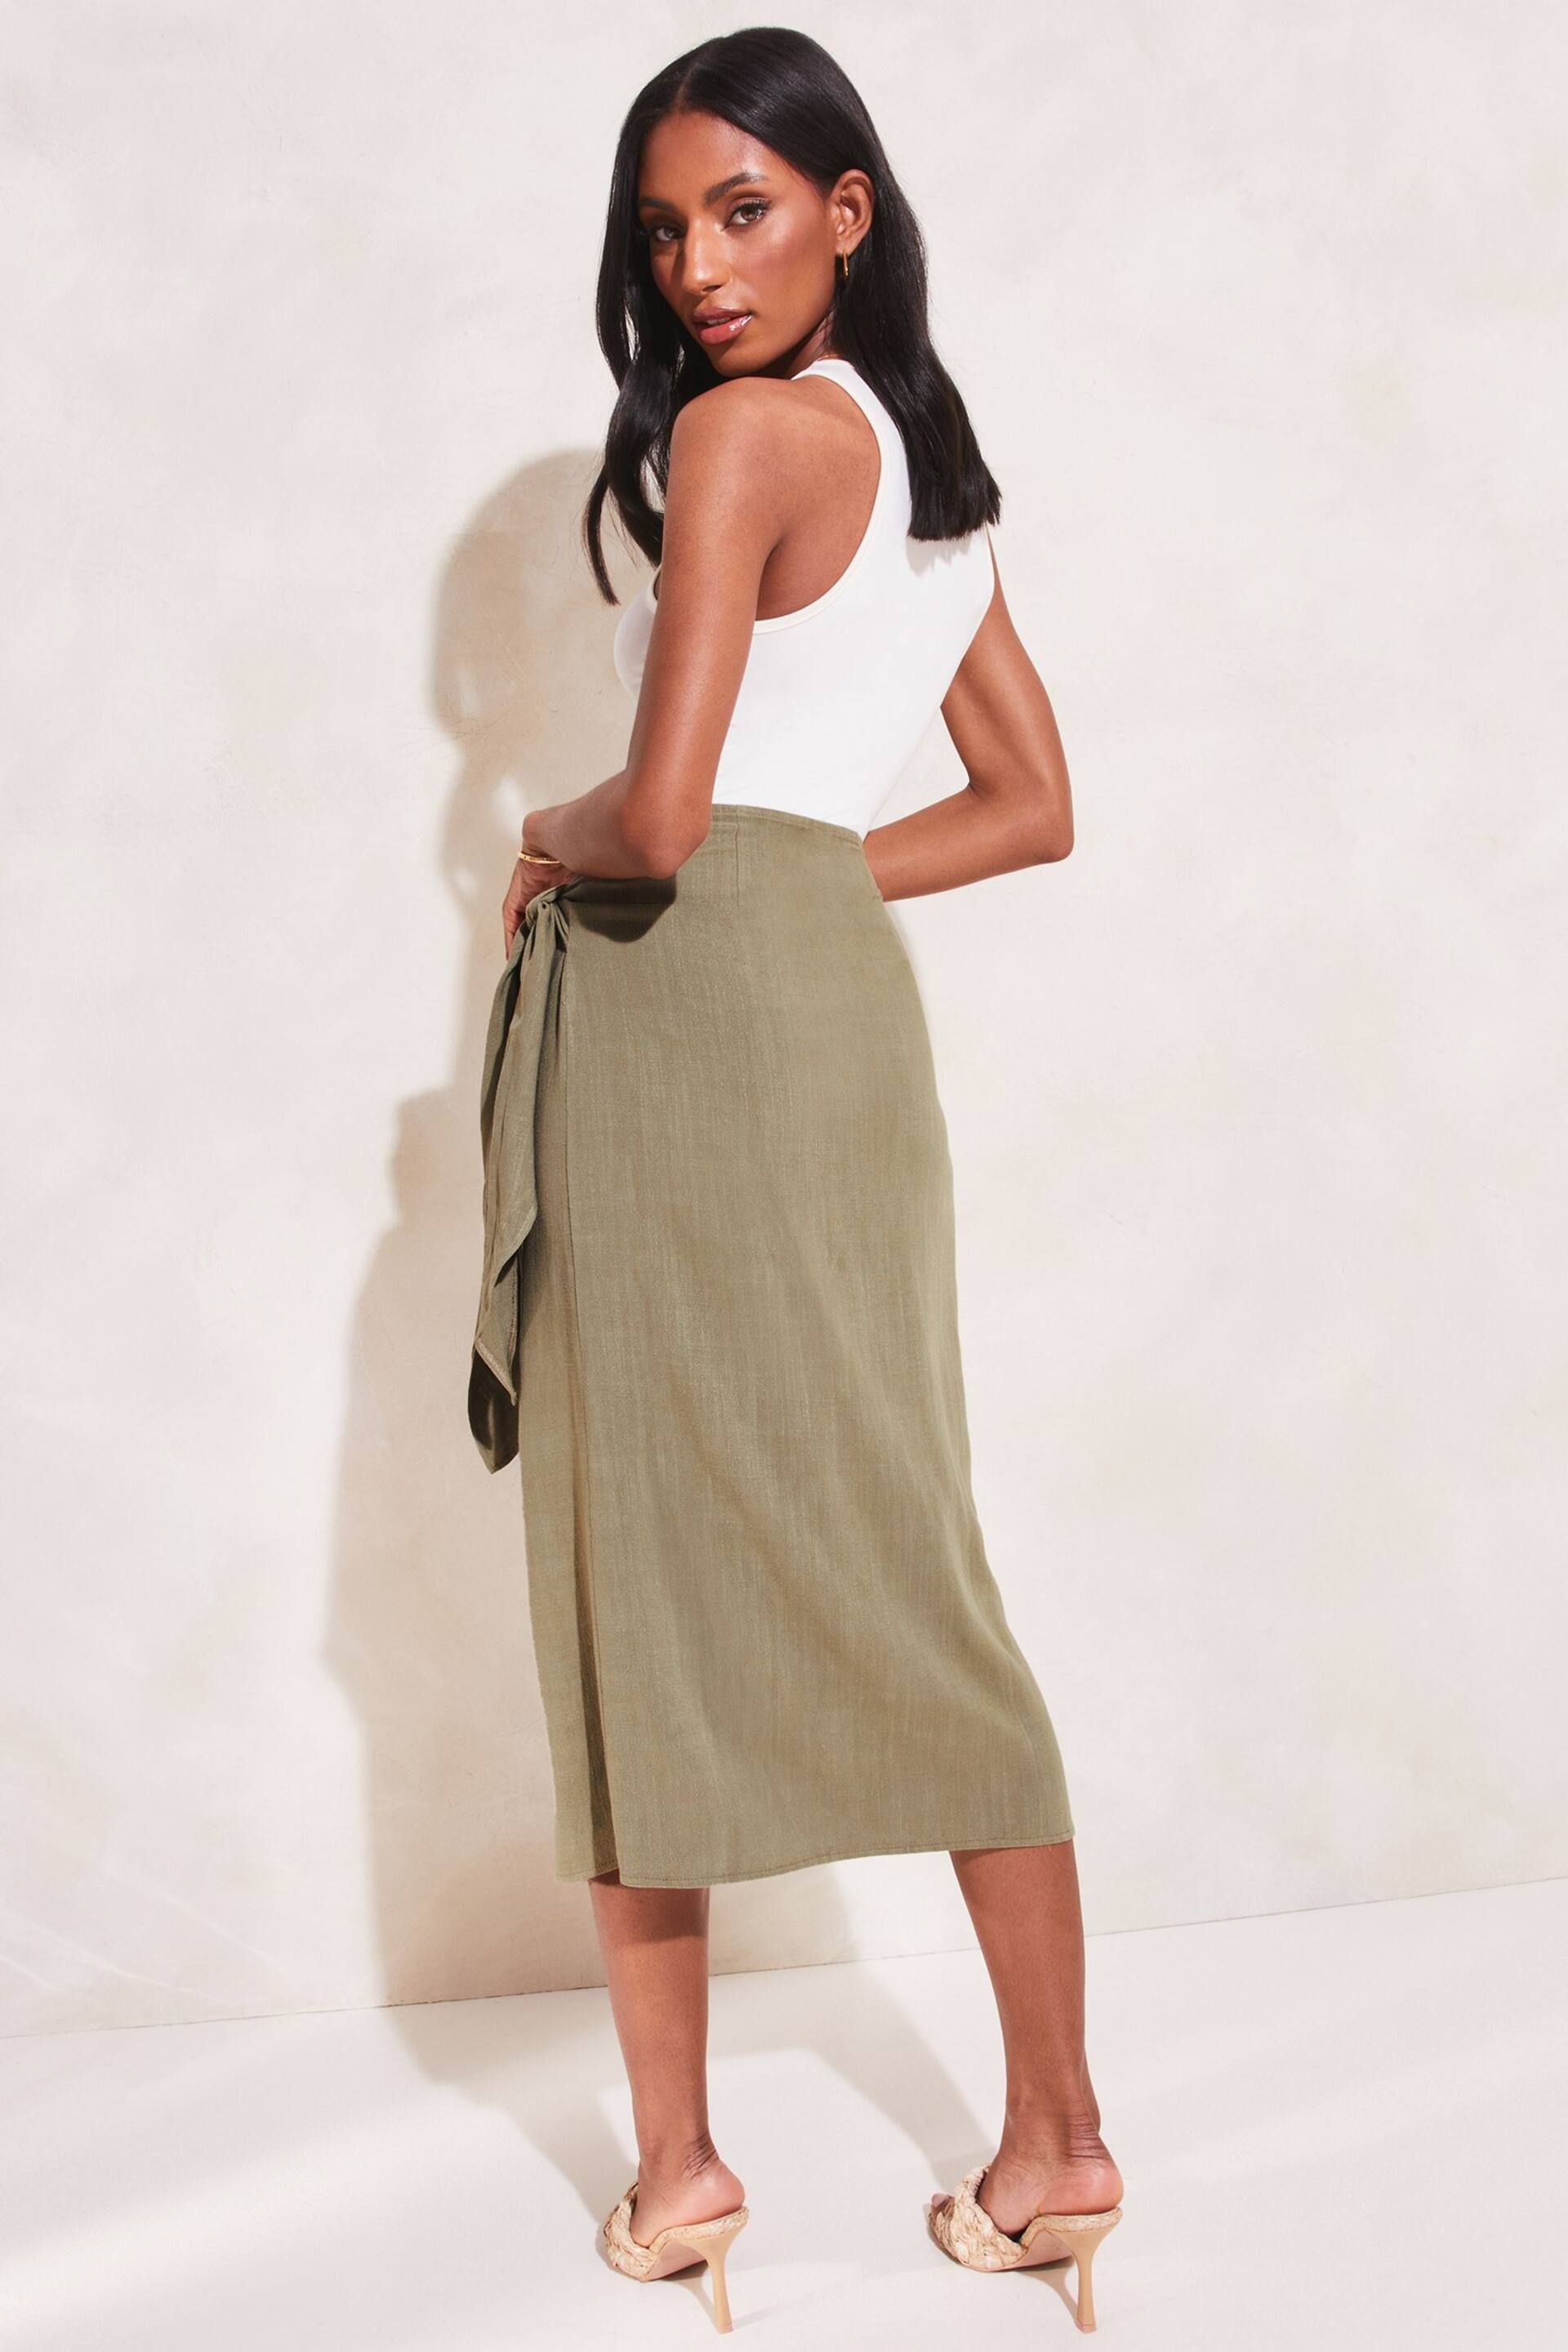 Lipsy Khaki Green Tall Tie Waist Wrap Midi Skirt - Image 2 of 4